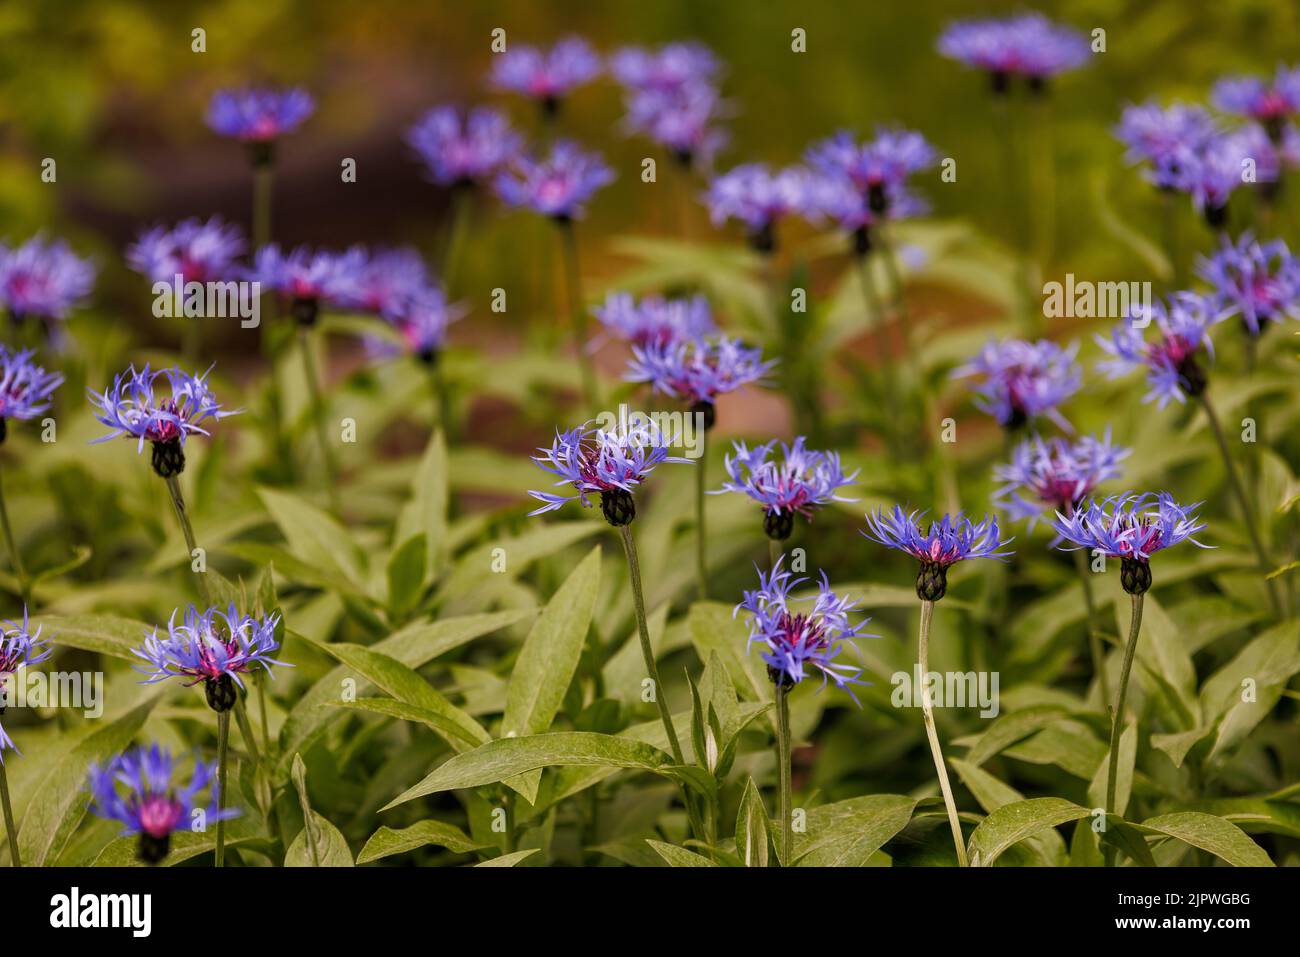 many squarrose knapweed, Centaurea (cyanus) triumfettii - blue flowers from Asteraceae family Stock Photo